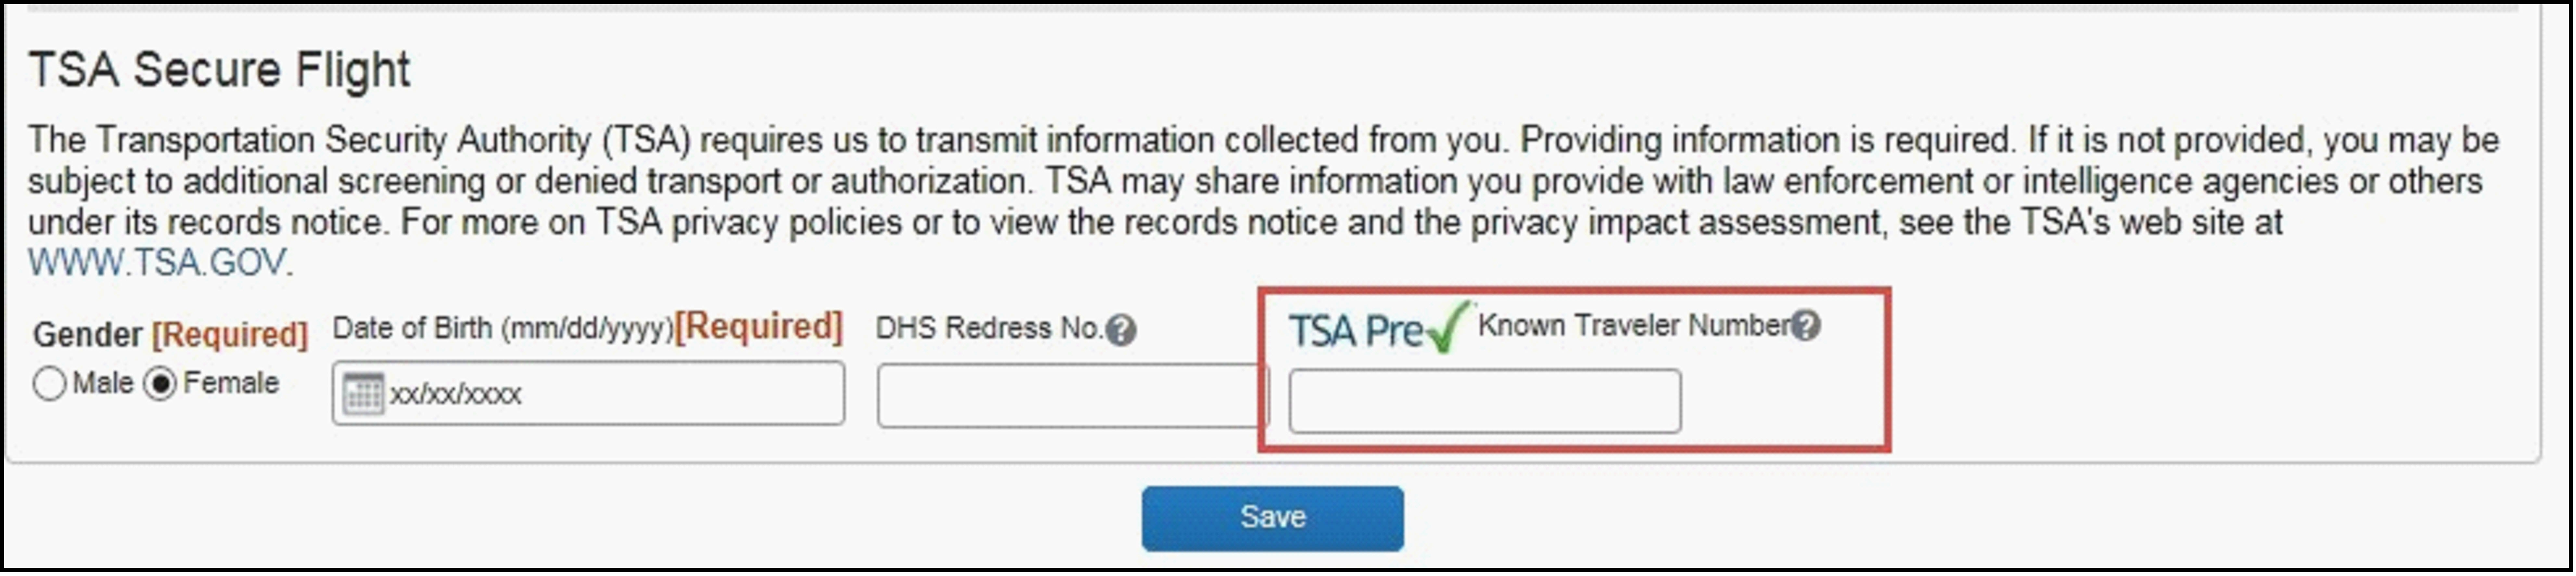 screenshot of TSA secure flight info